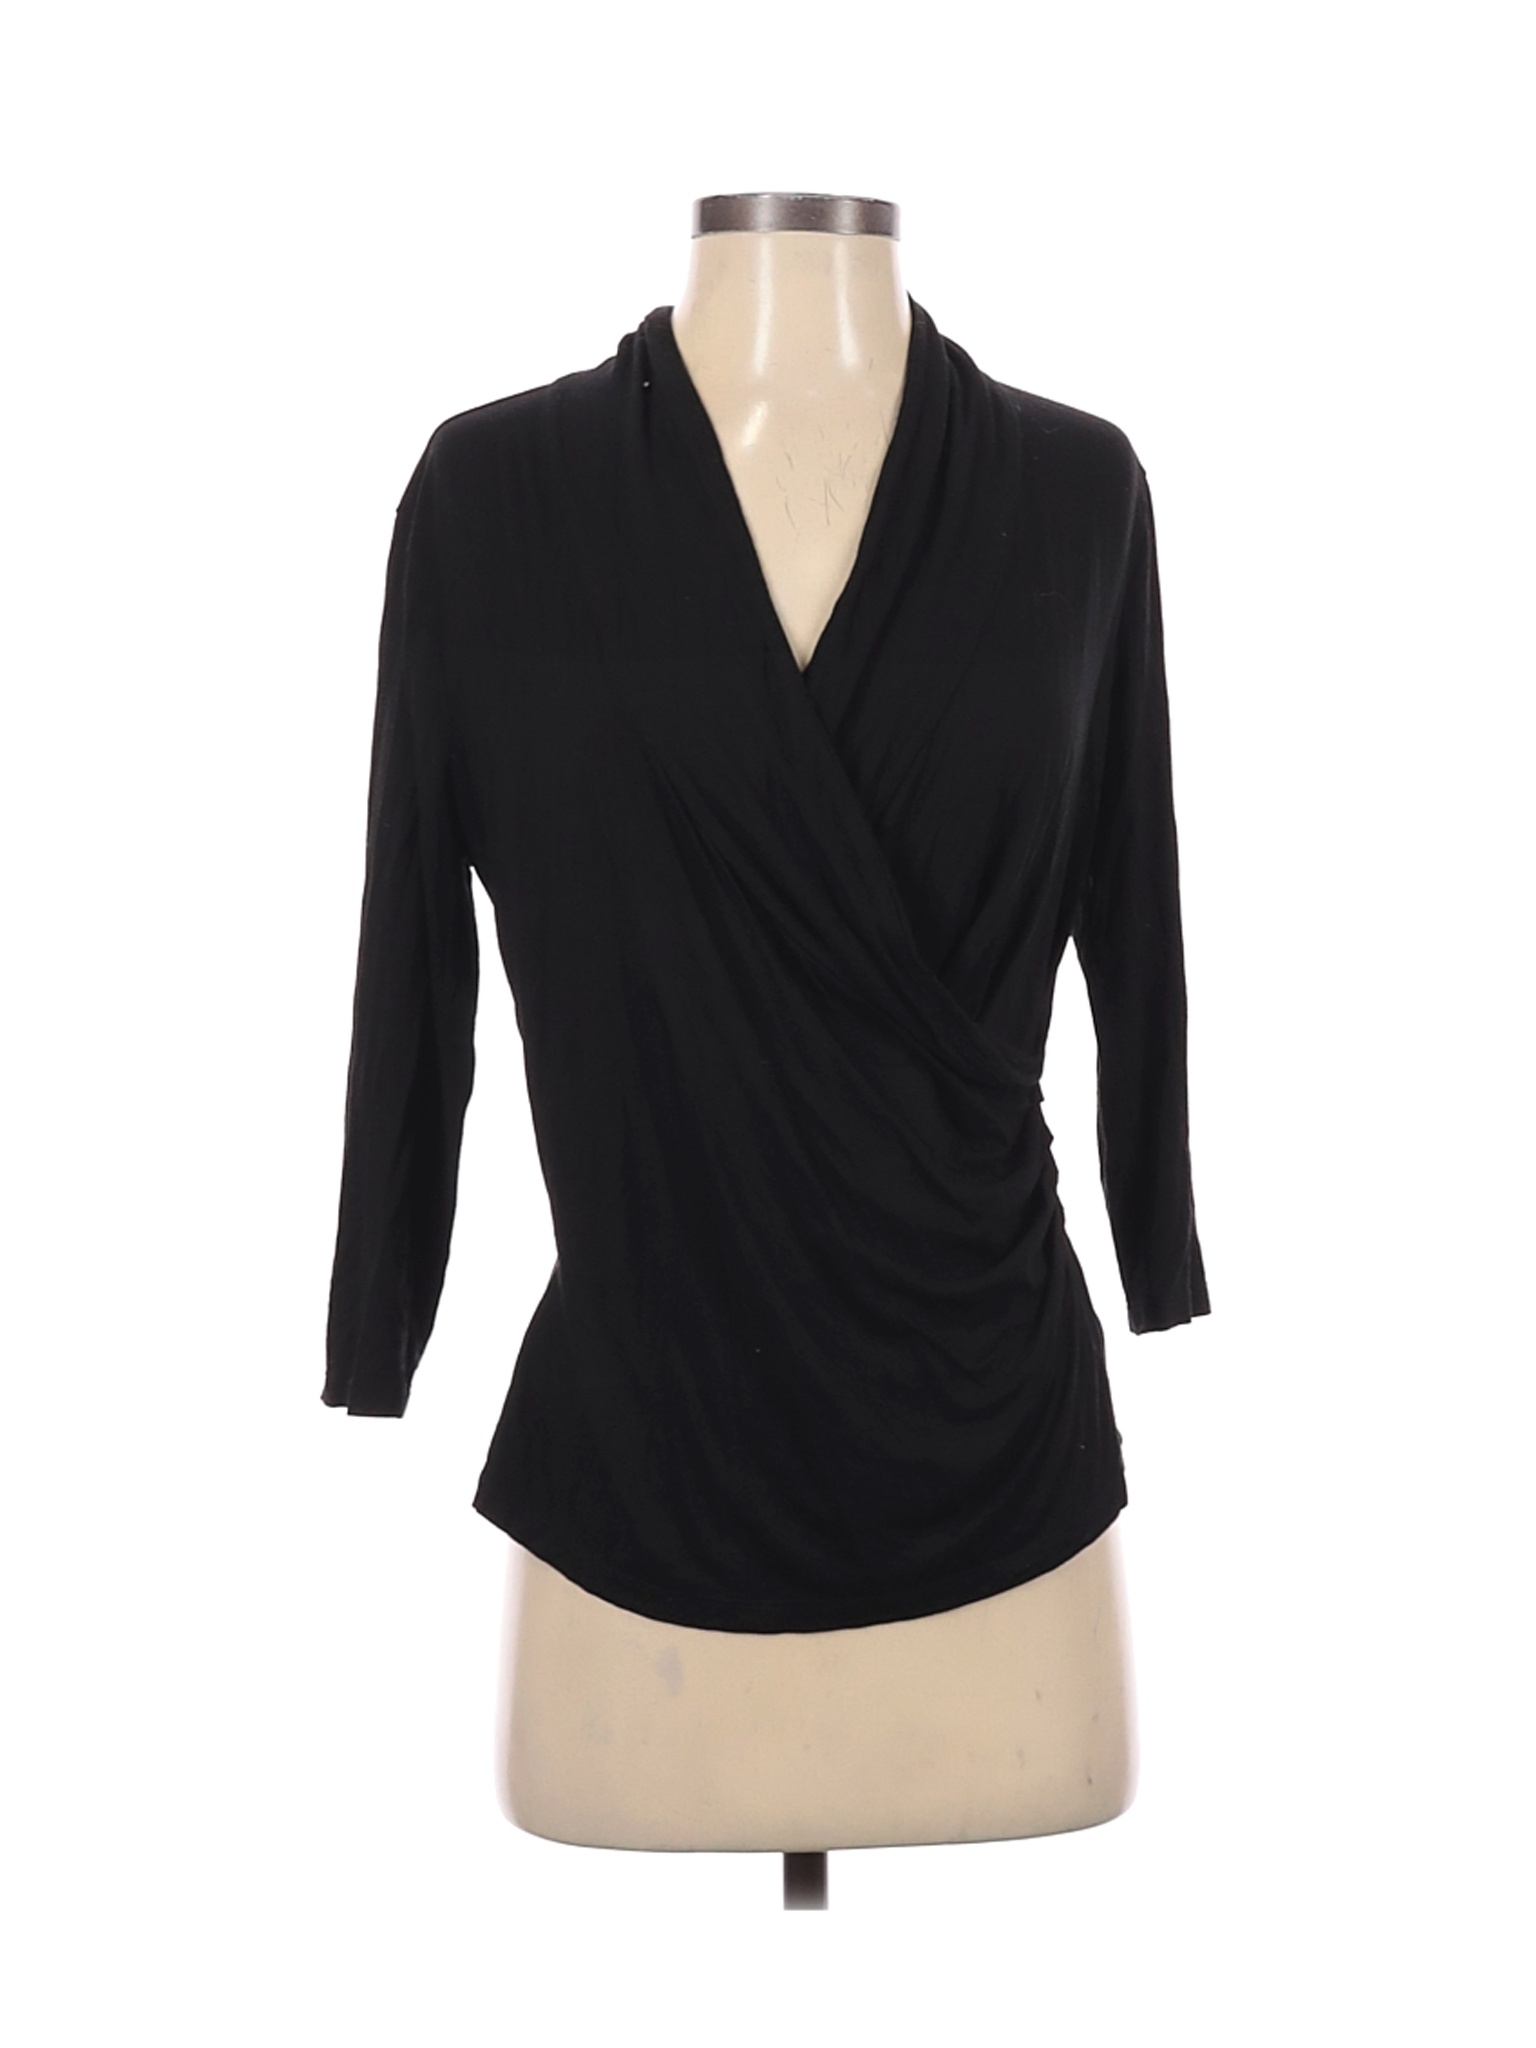 Talbots Women Black Long Sleeve Top S Petites | eBay